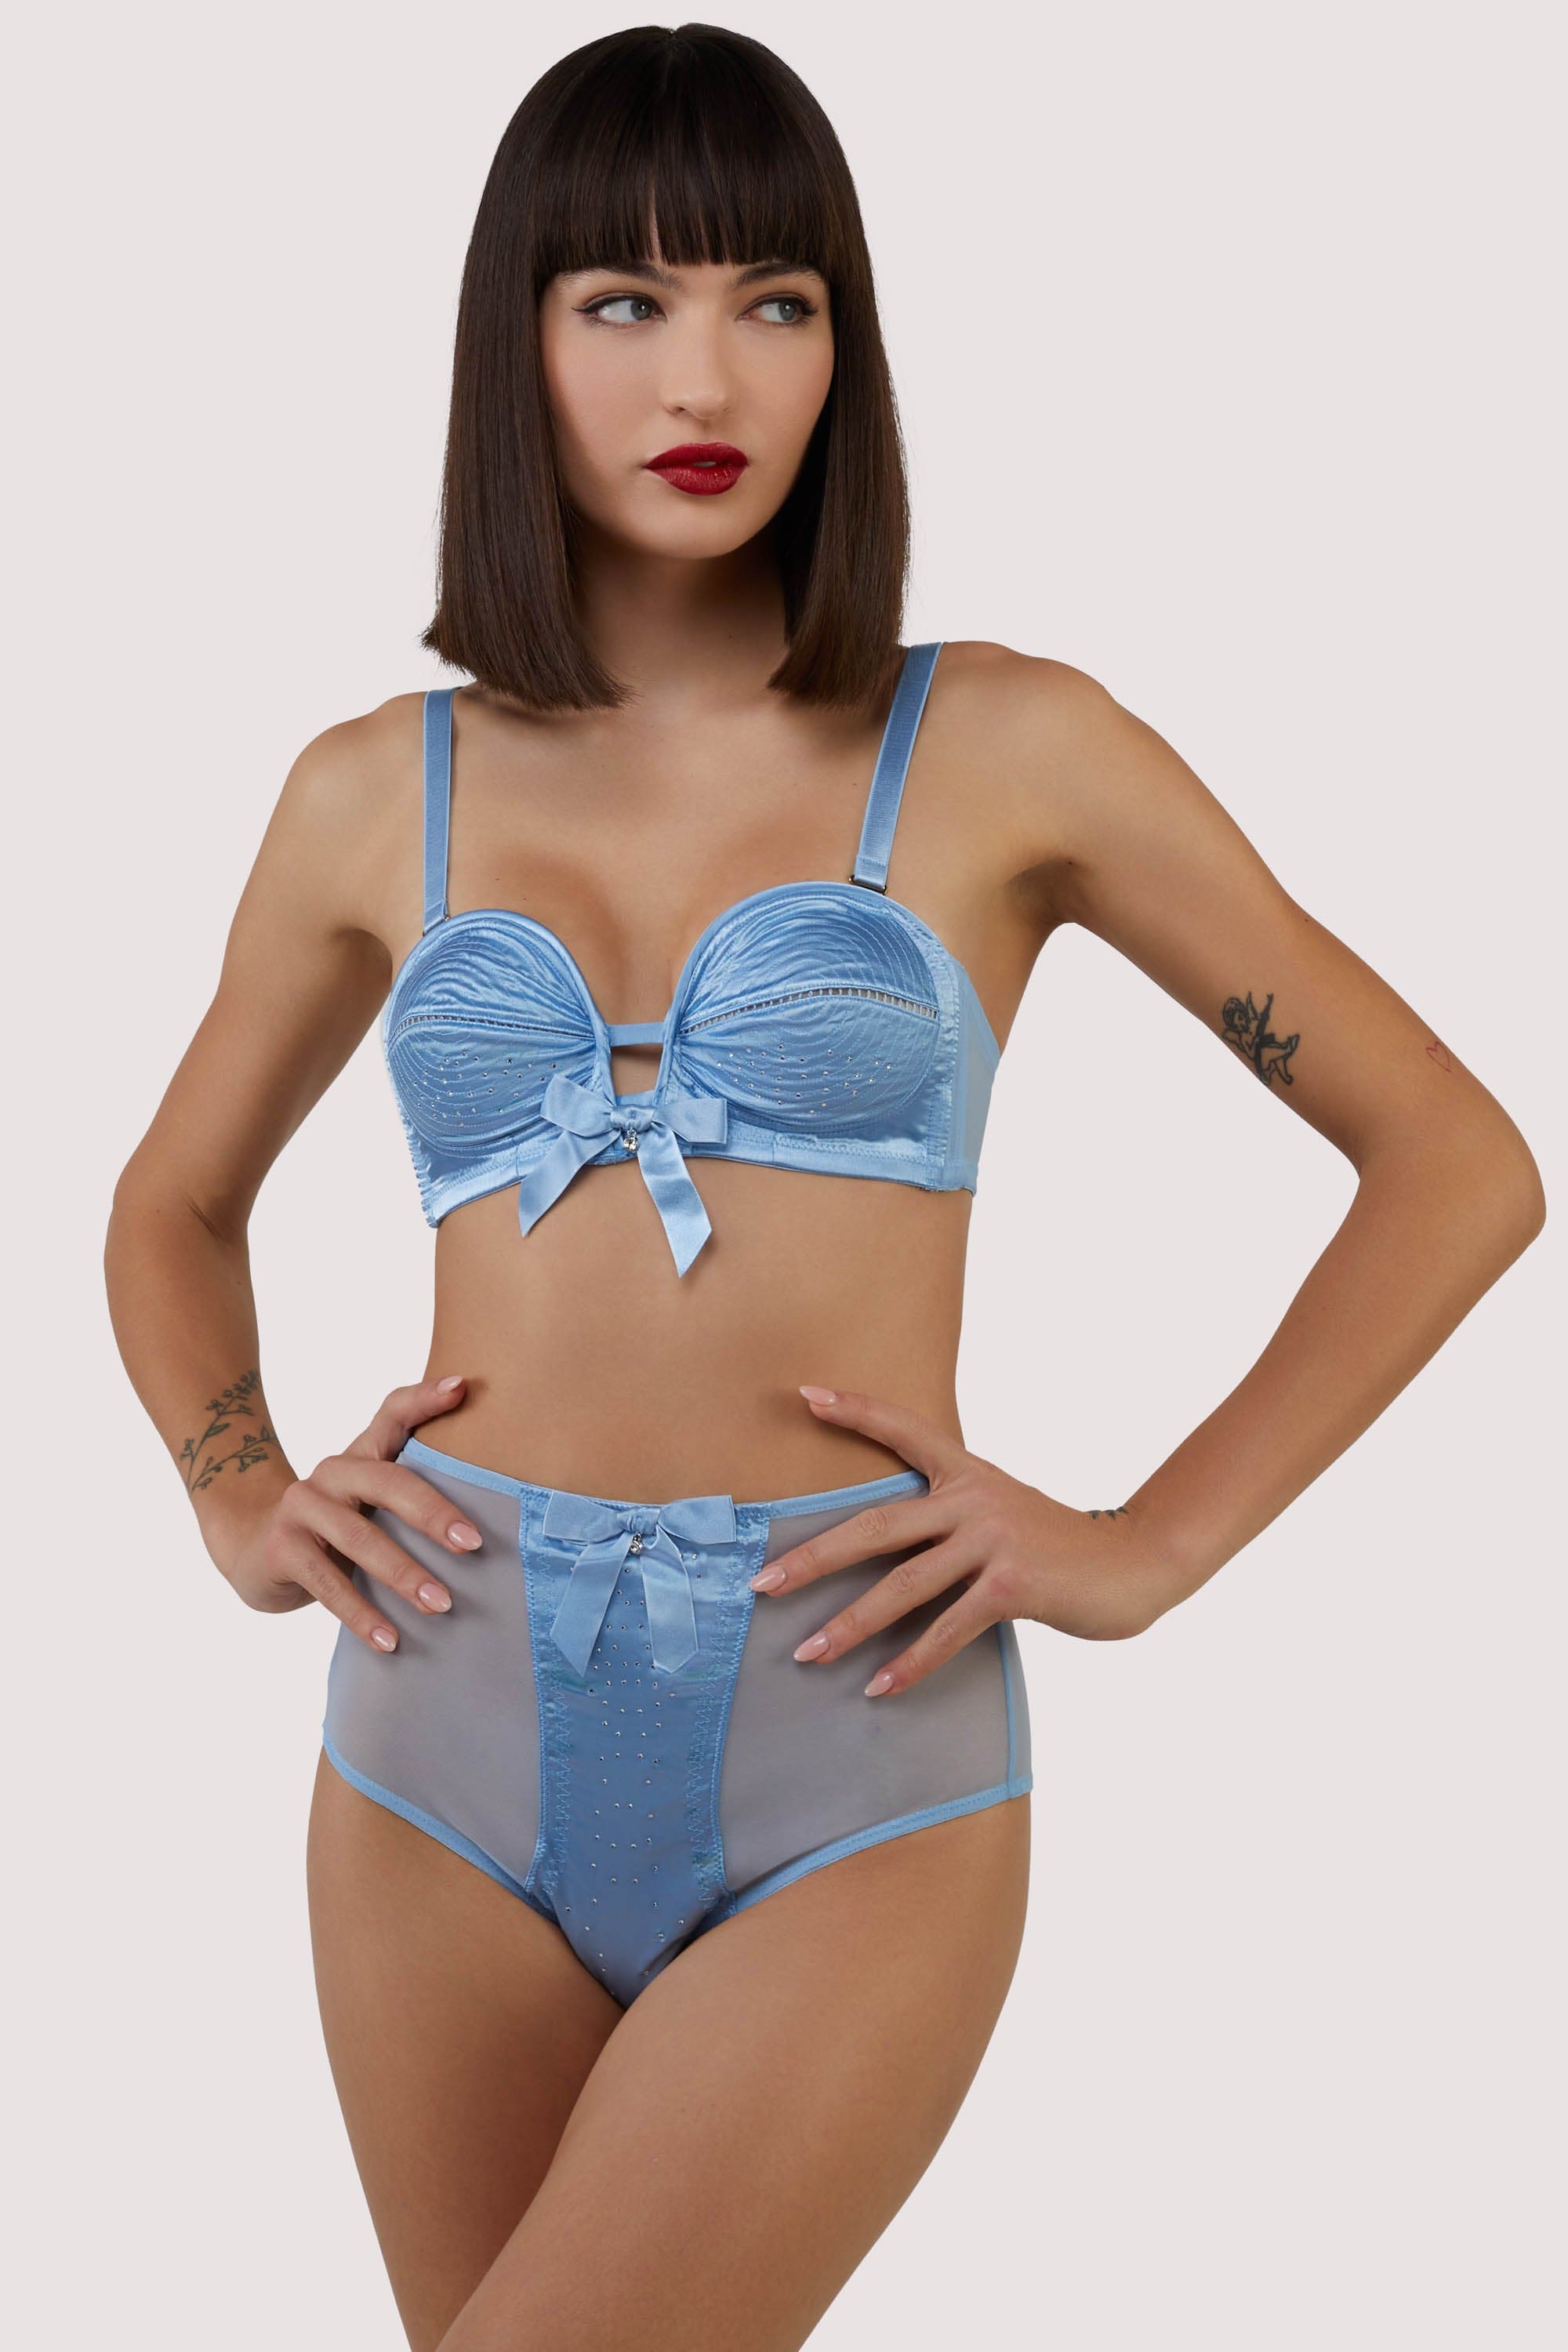 Core:model wears retro blue satin lingerie set